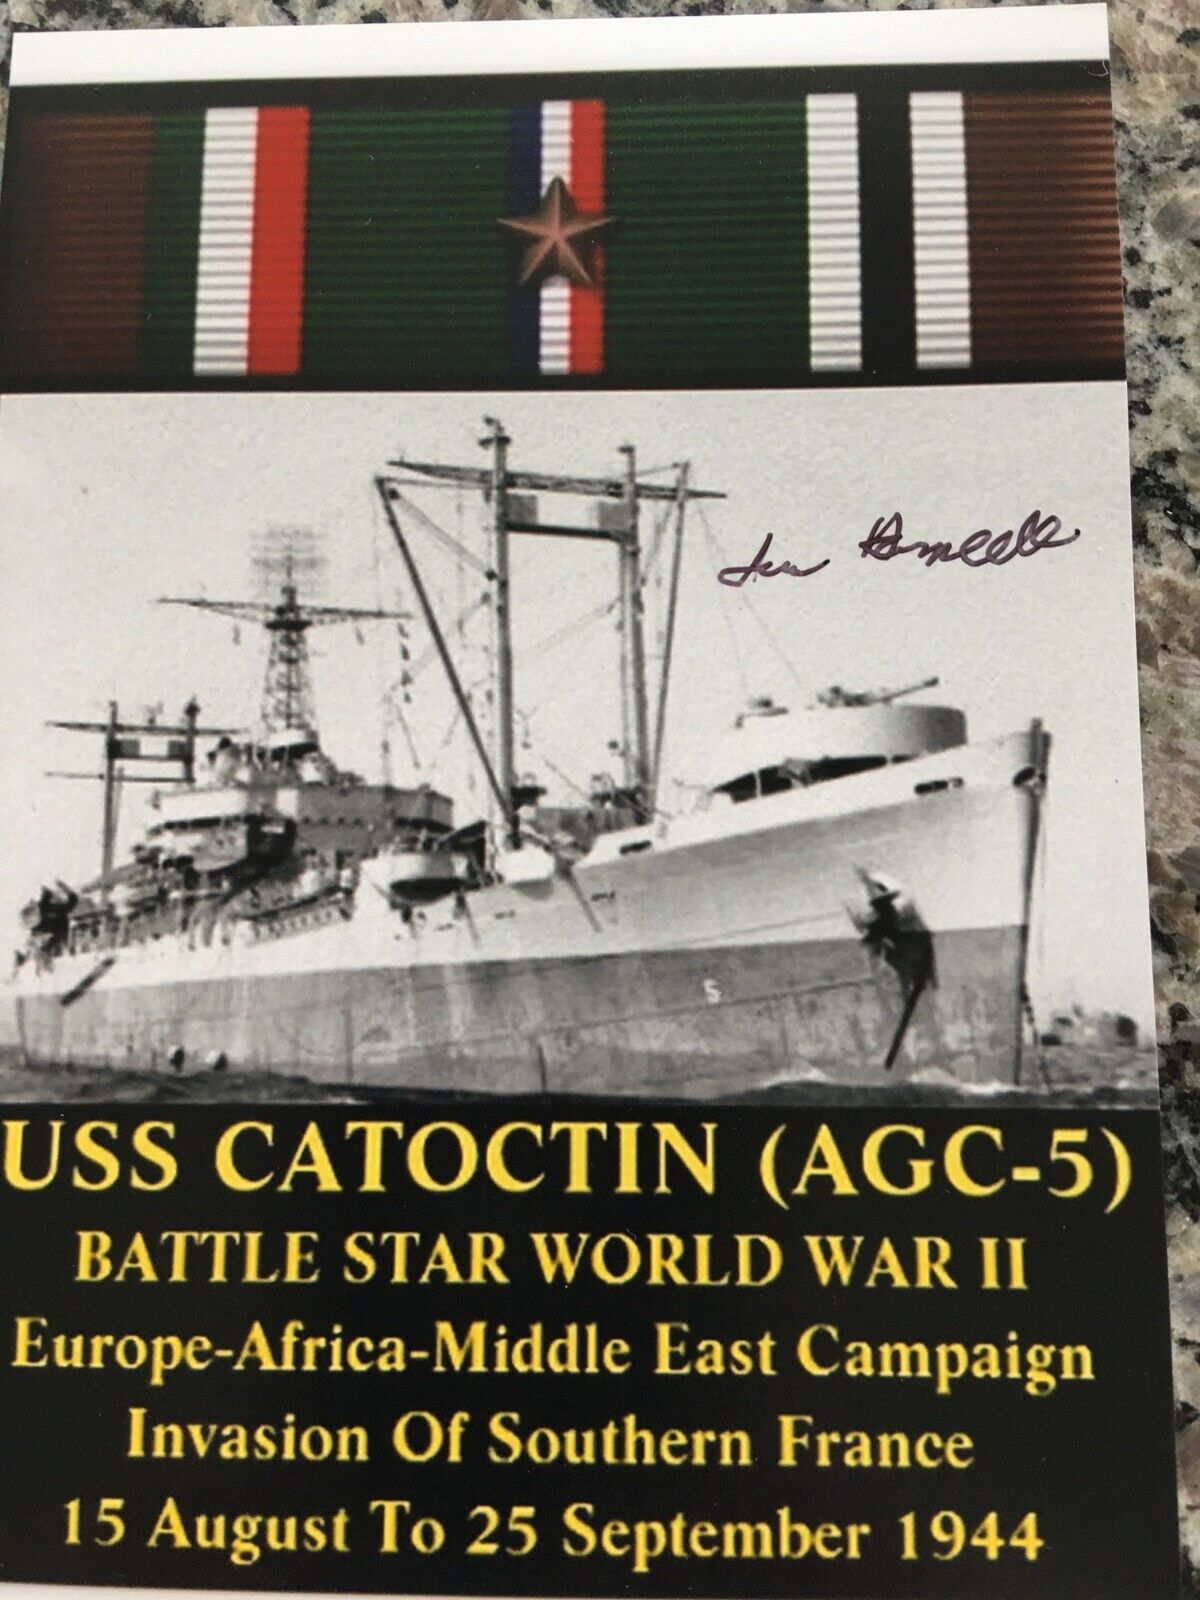 IKE HARRELL USS CATOCTIN AGC-5 LANDING CRAFT COXSWAIN VETERAN,RARE SIGNED Photo Poster painting